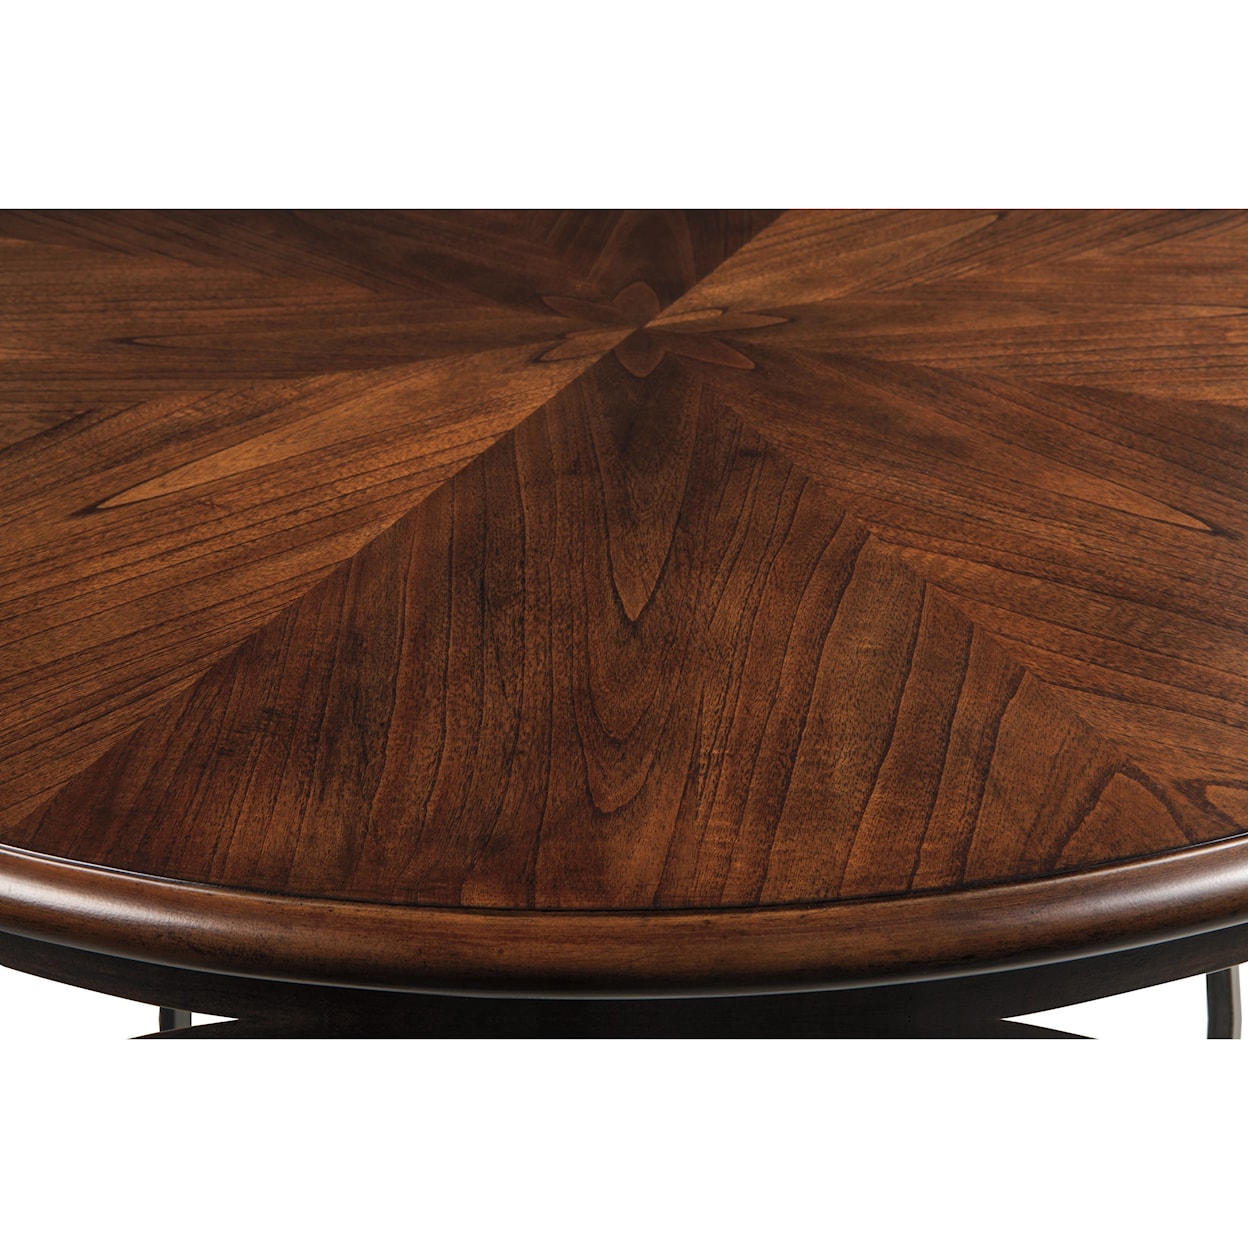 Ashley Furniture Signature Design Centiar Round Dining Room Table